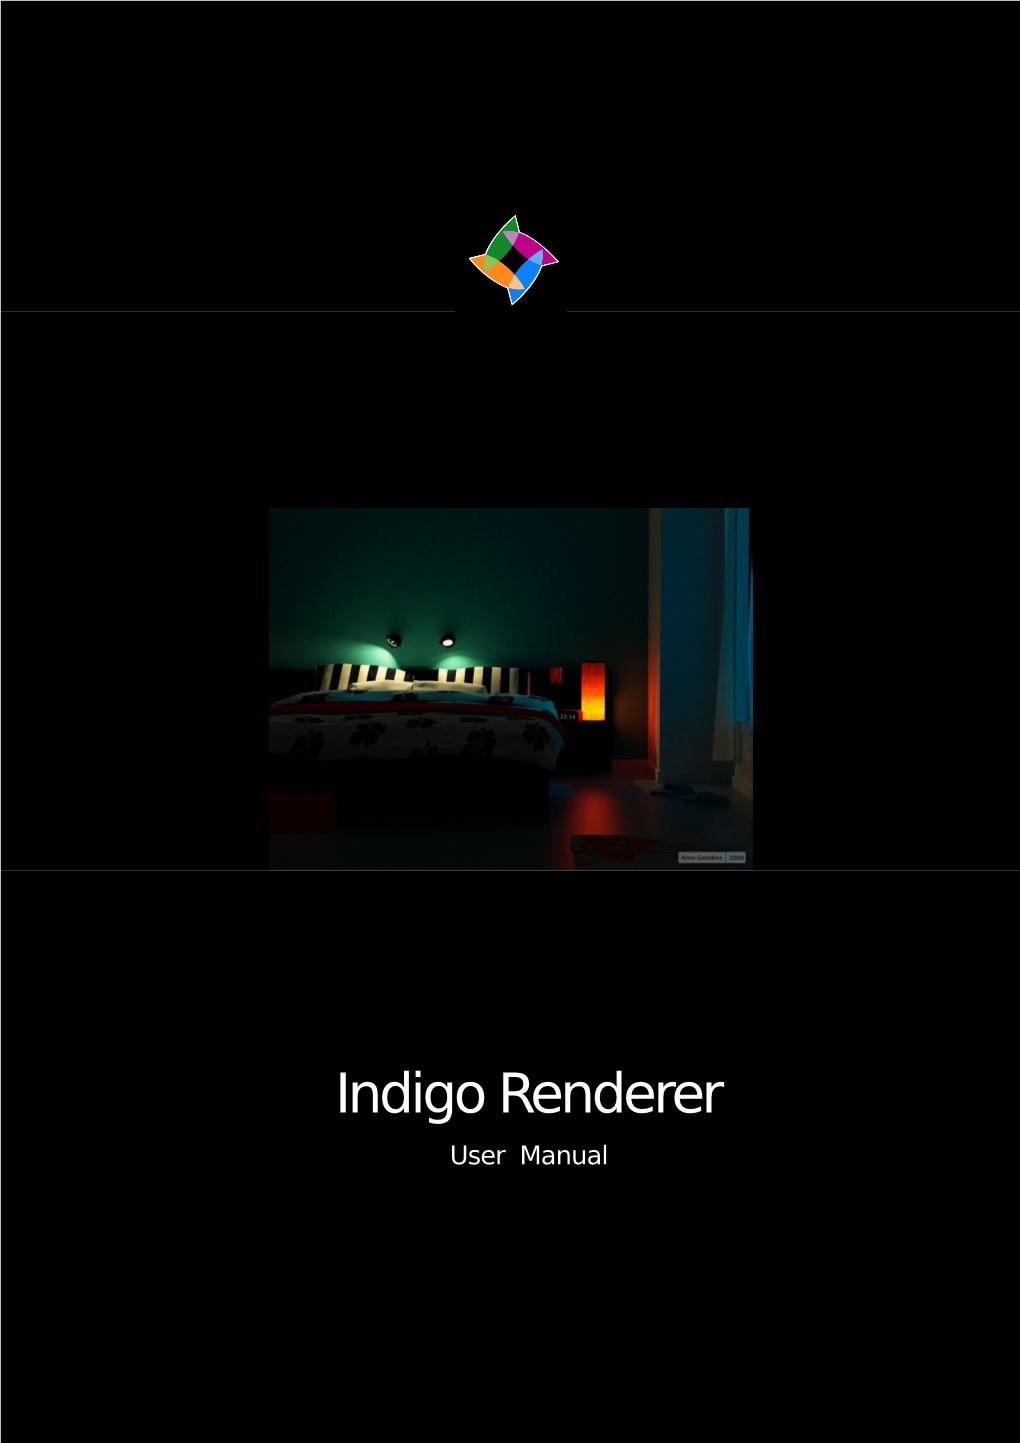 Indigo Renderer User Manual Contents